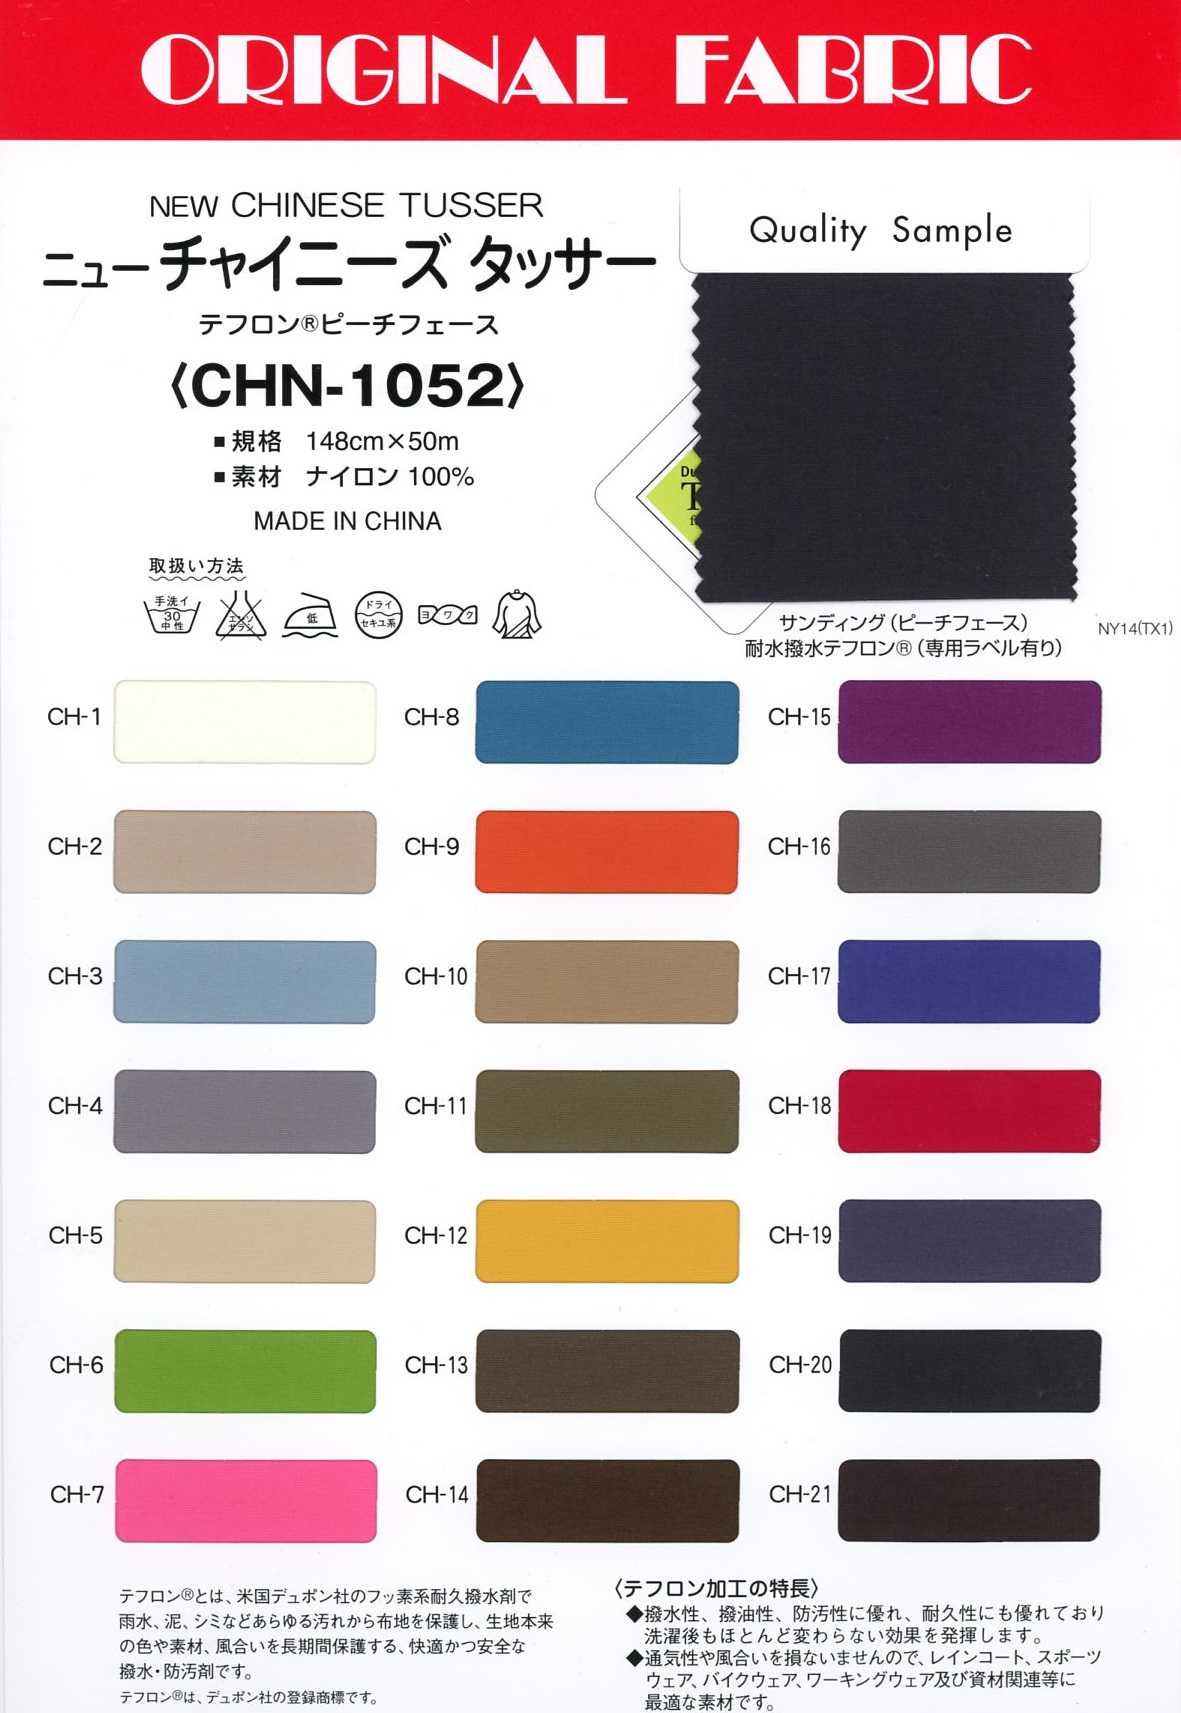 CHN-1052 Novo Tussar Chinês[Têxtil / Tecido] Masuda